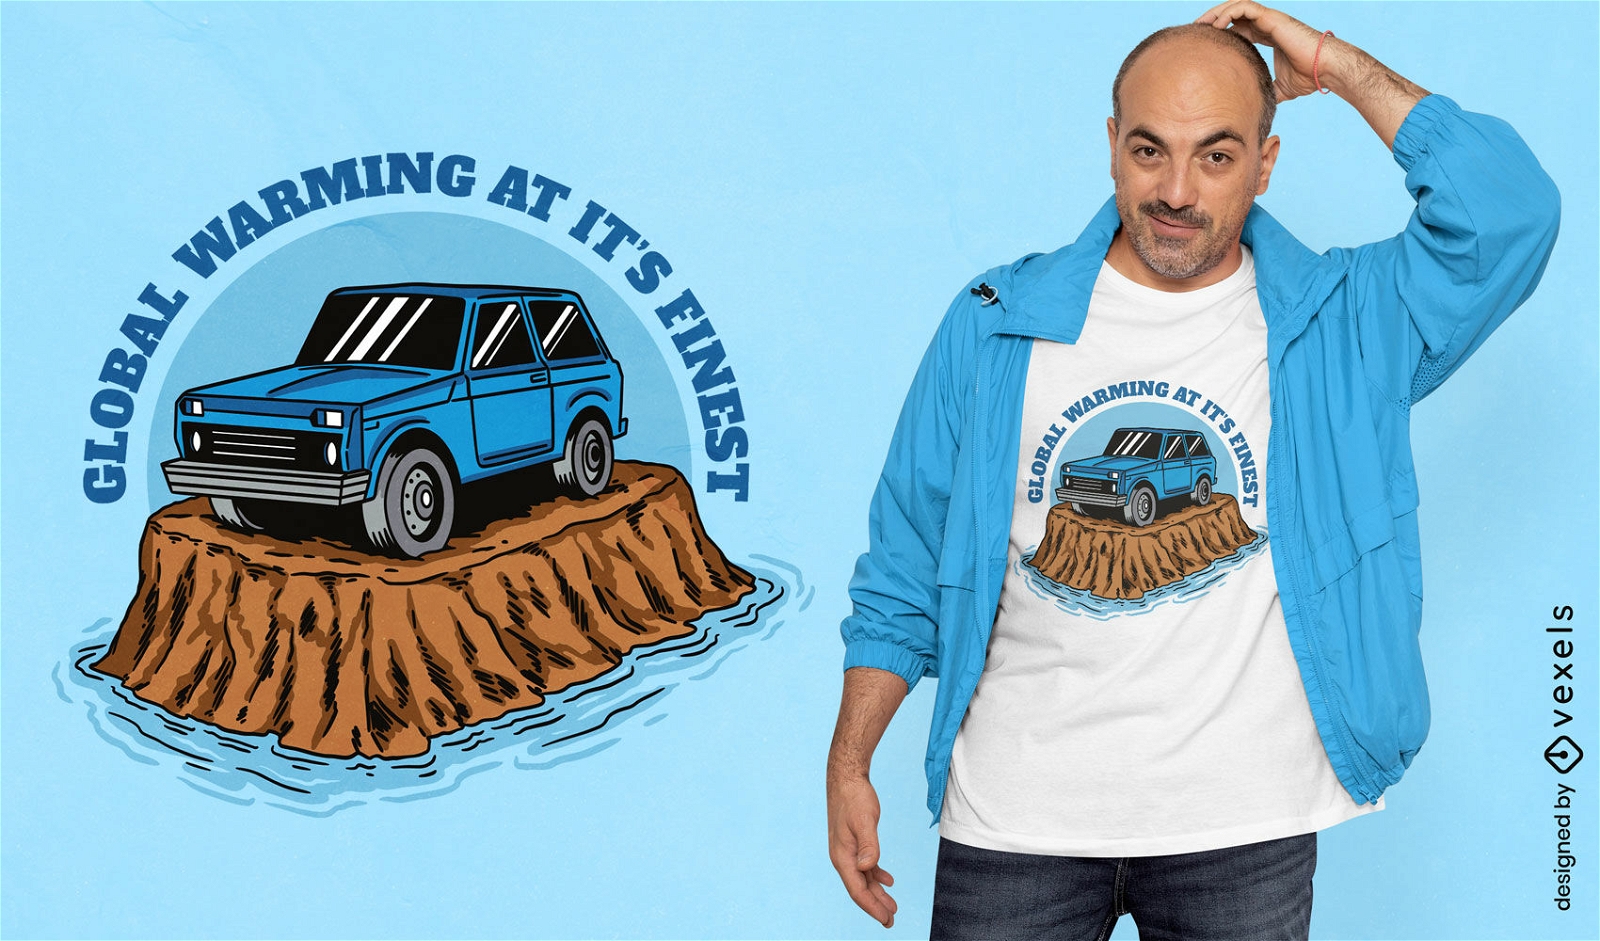 Blue car global warming t-shirt design